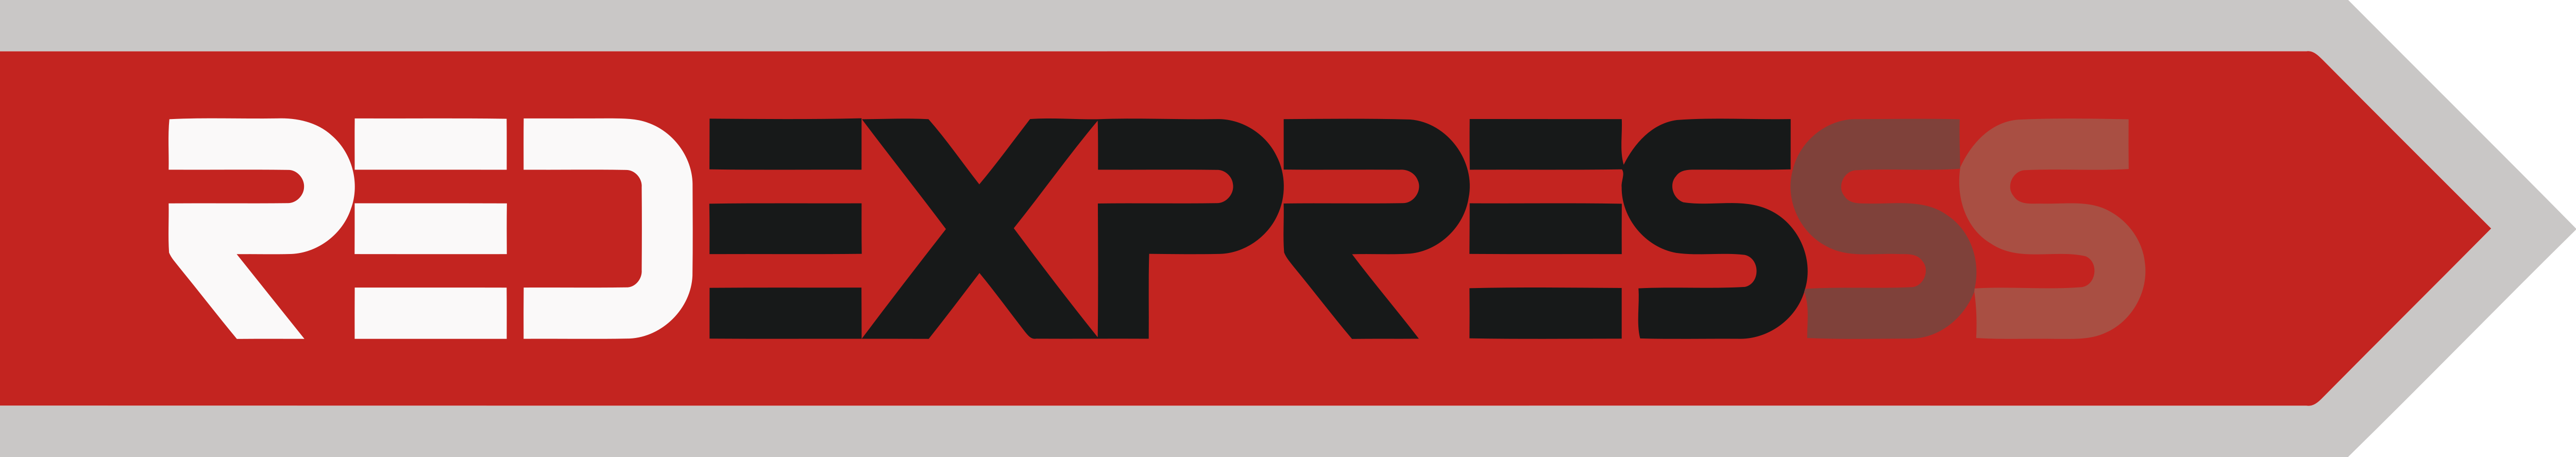 Express. Express логотип. Логотип redexpress. Ред экспресс Курьерская служба. Логотип транспортной компании экспресс.